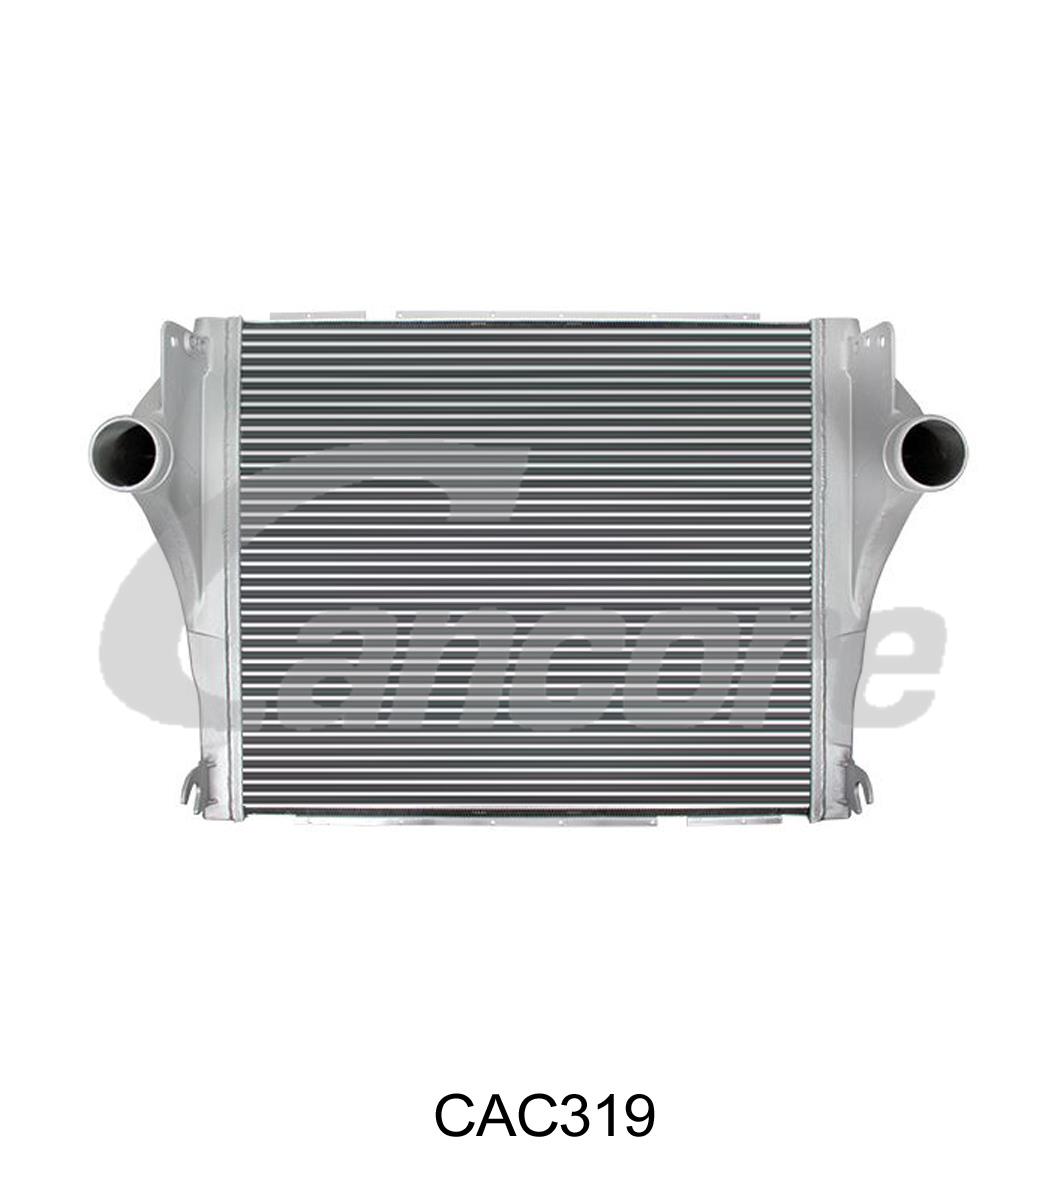 CAC319 2